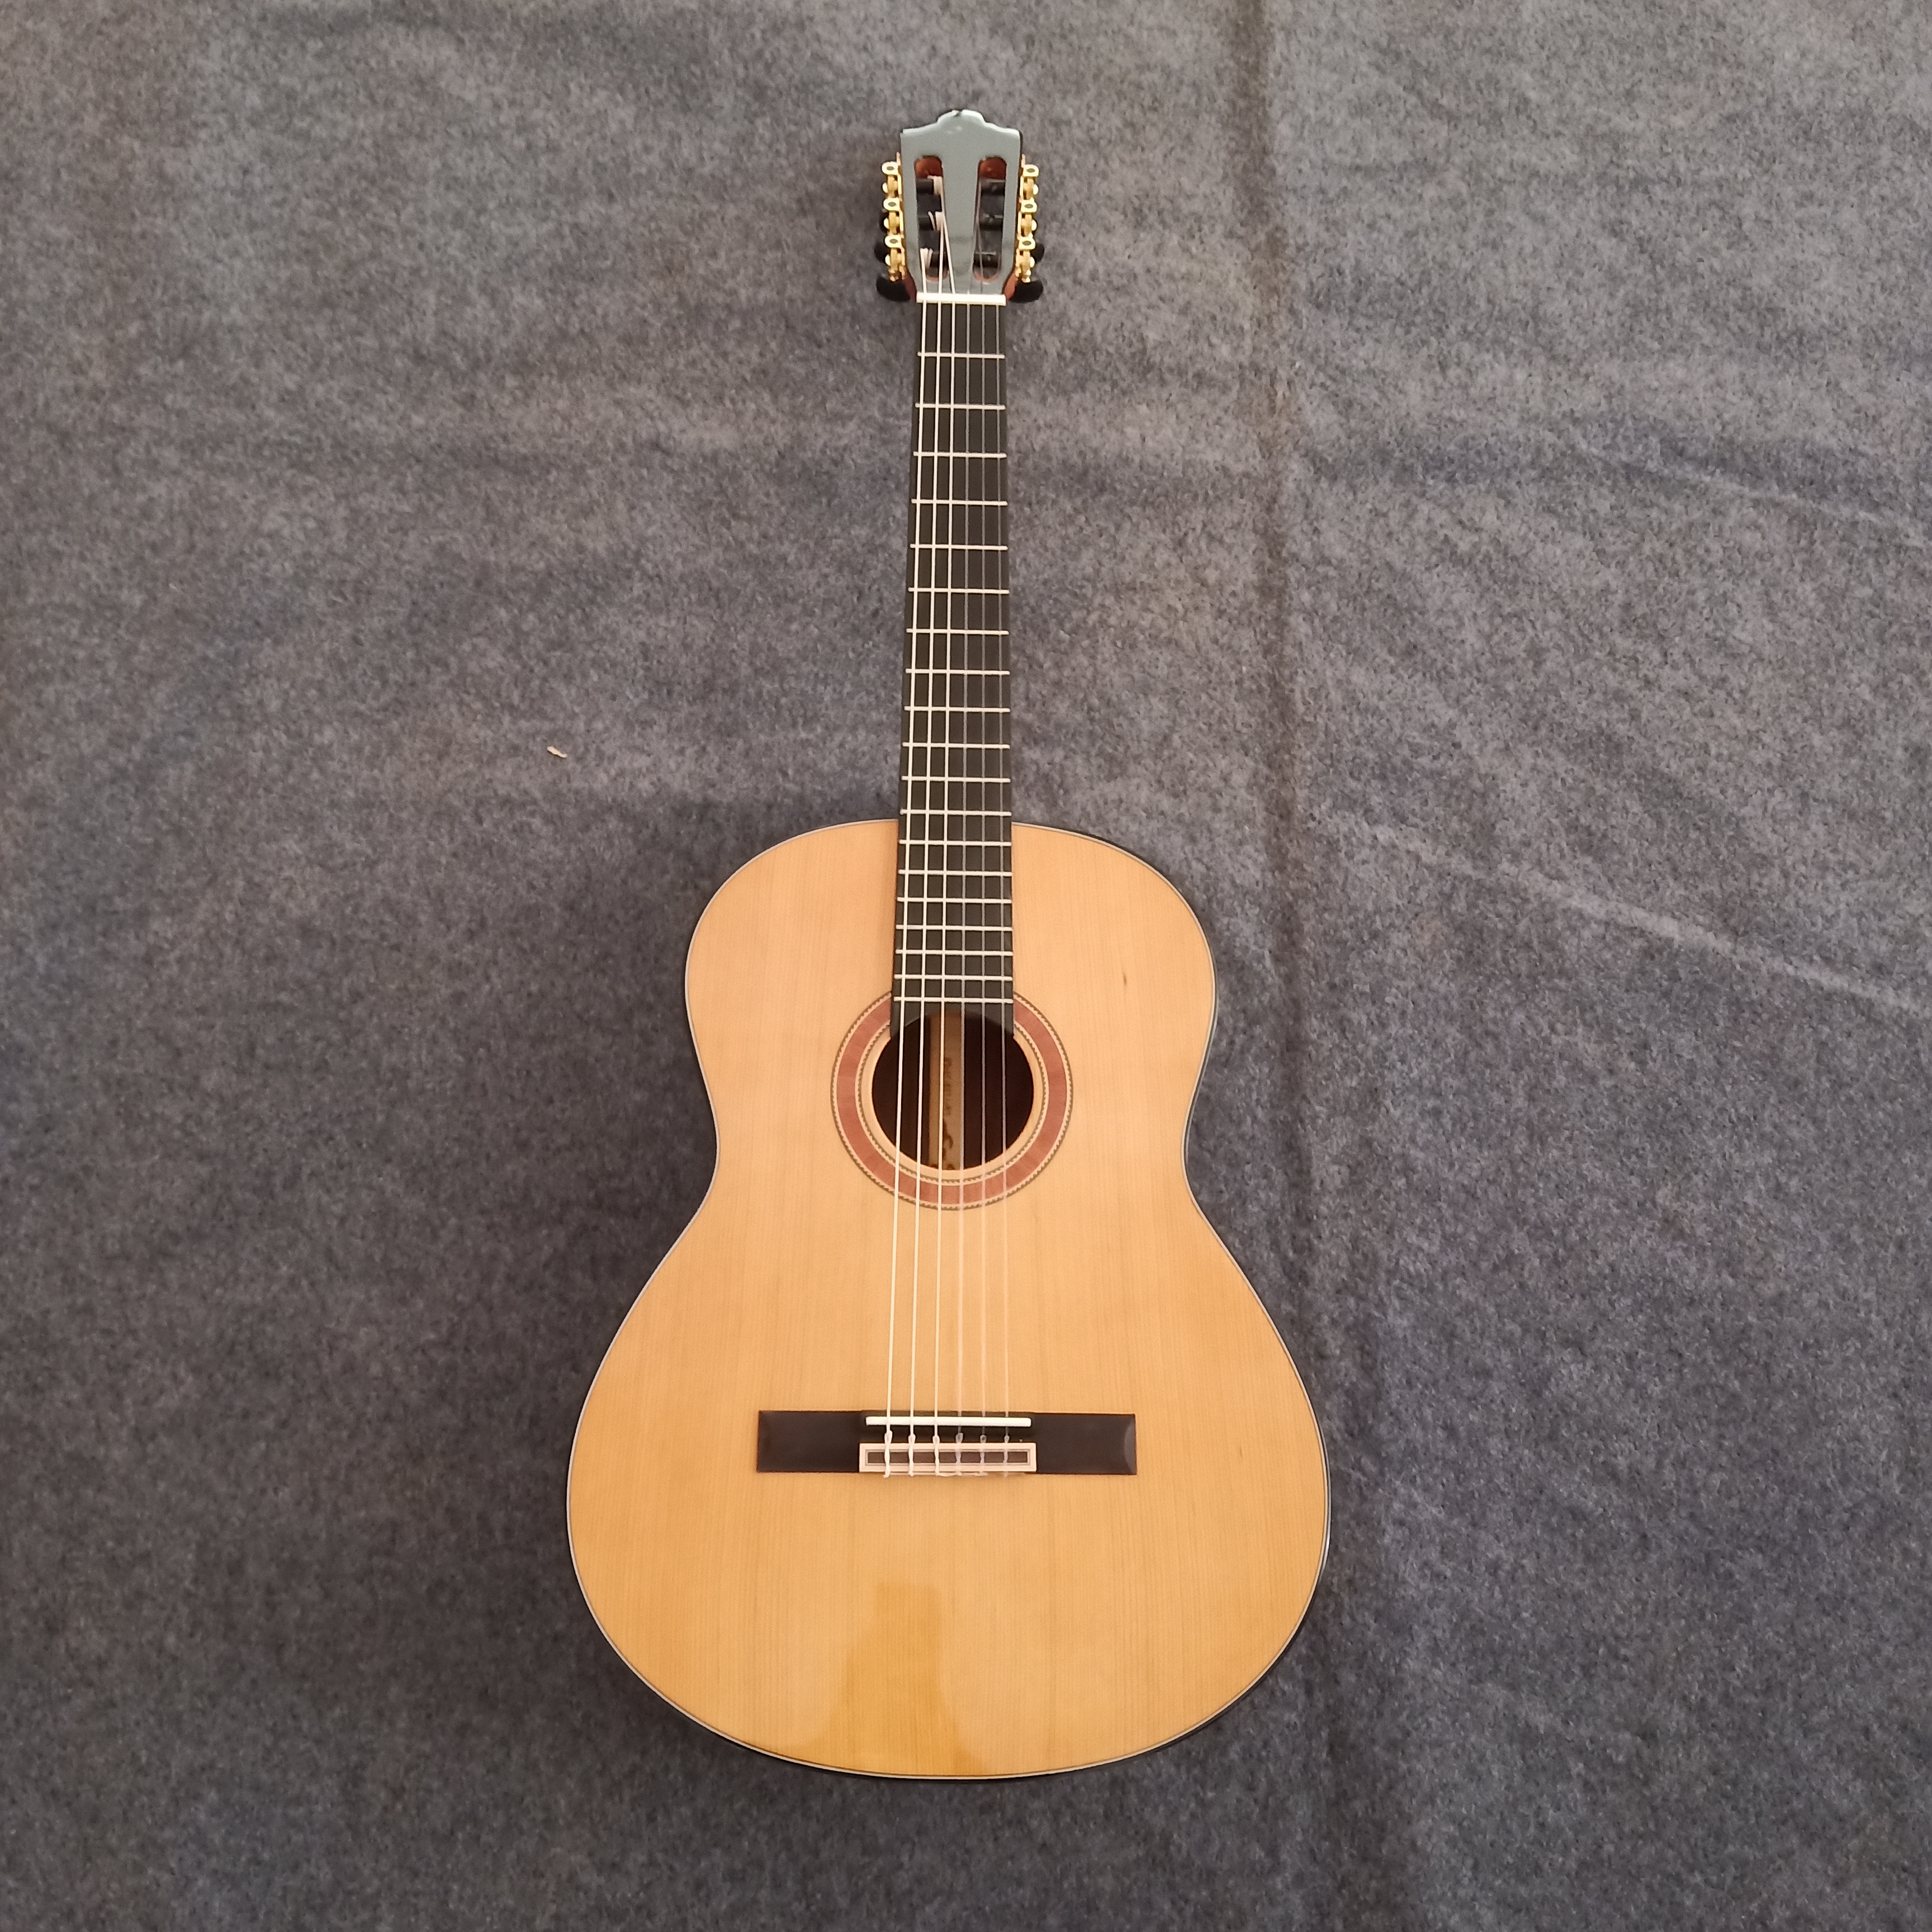 CG-710S classical guitar